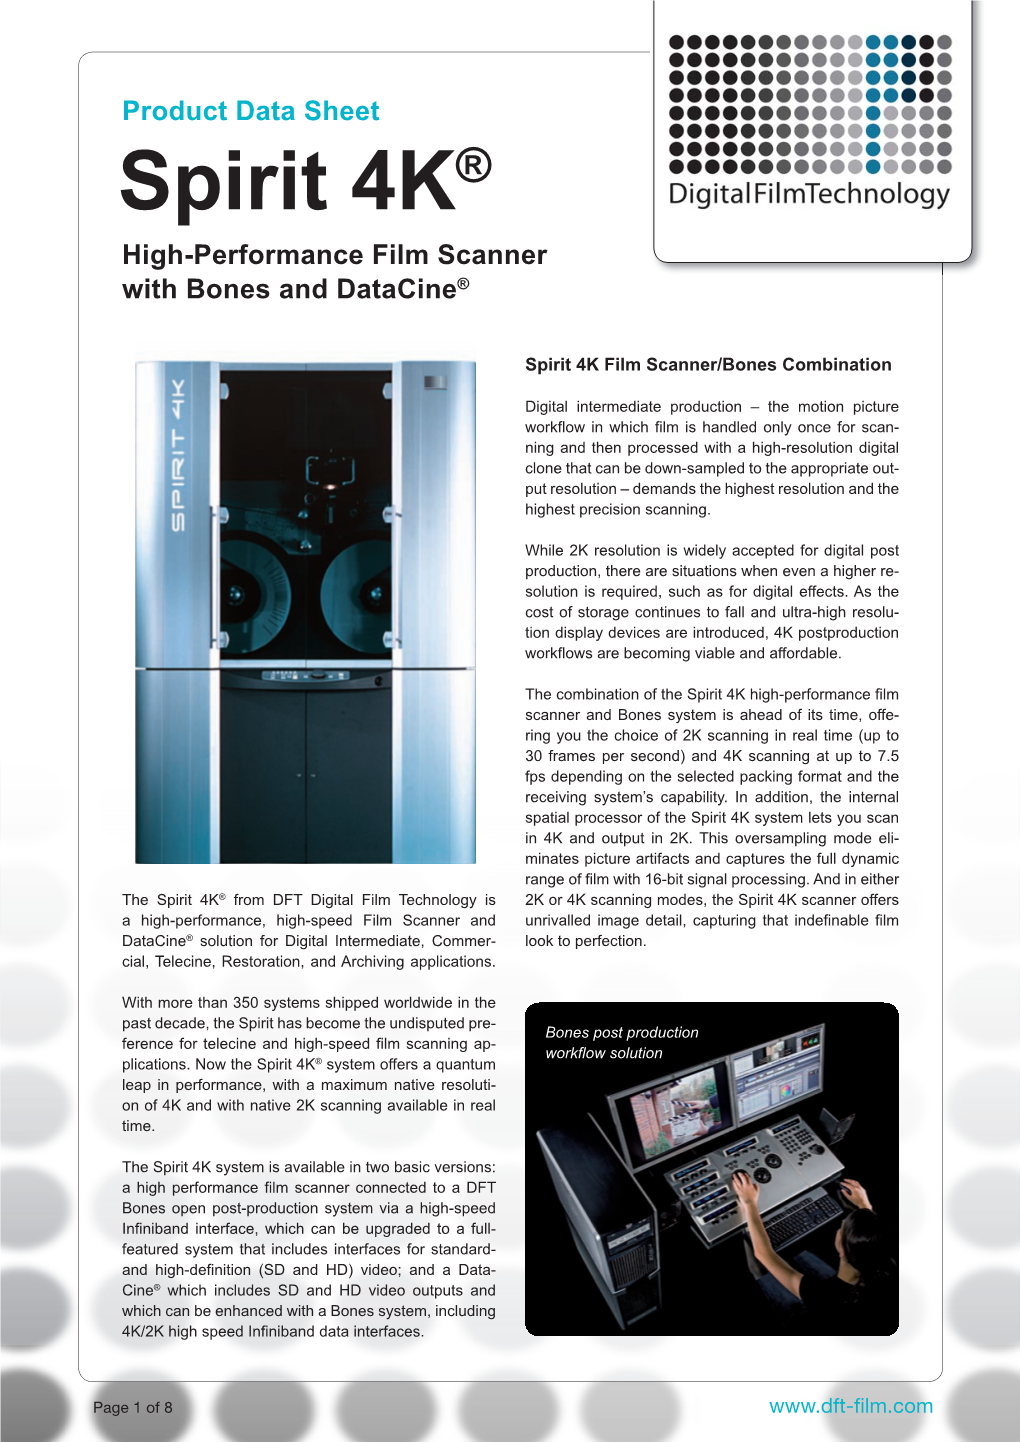 Spirit 4K® High-Performance Film Scanner with Bones and Datacine®